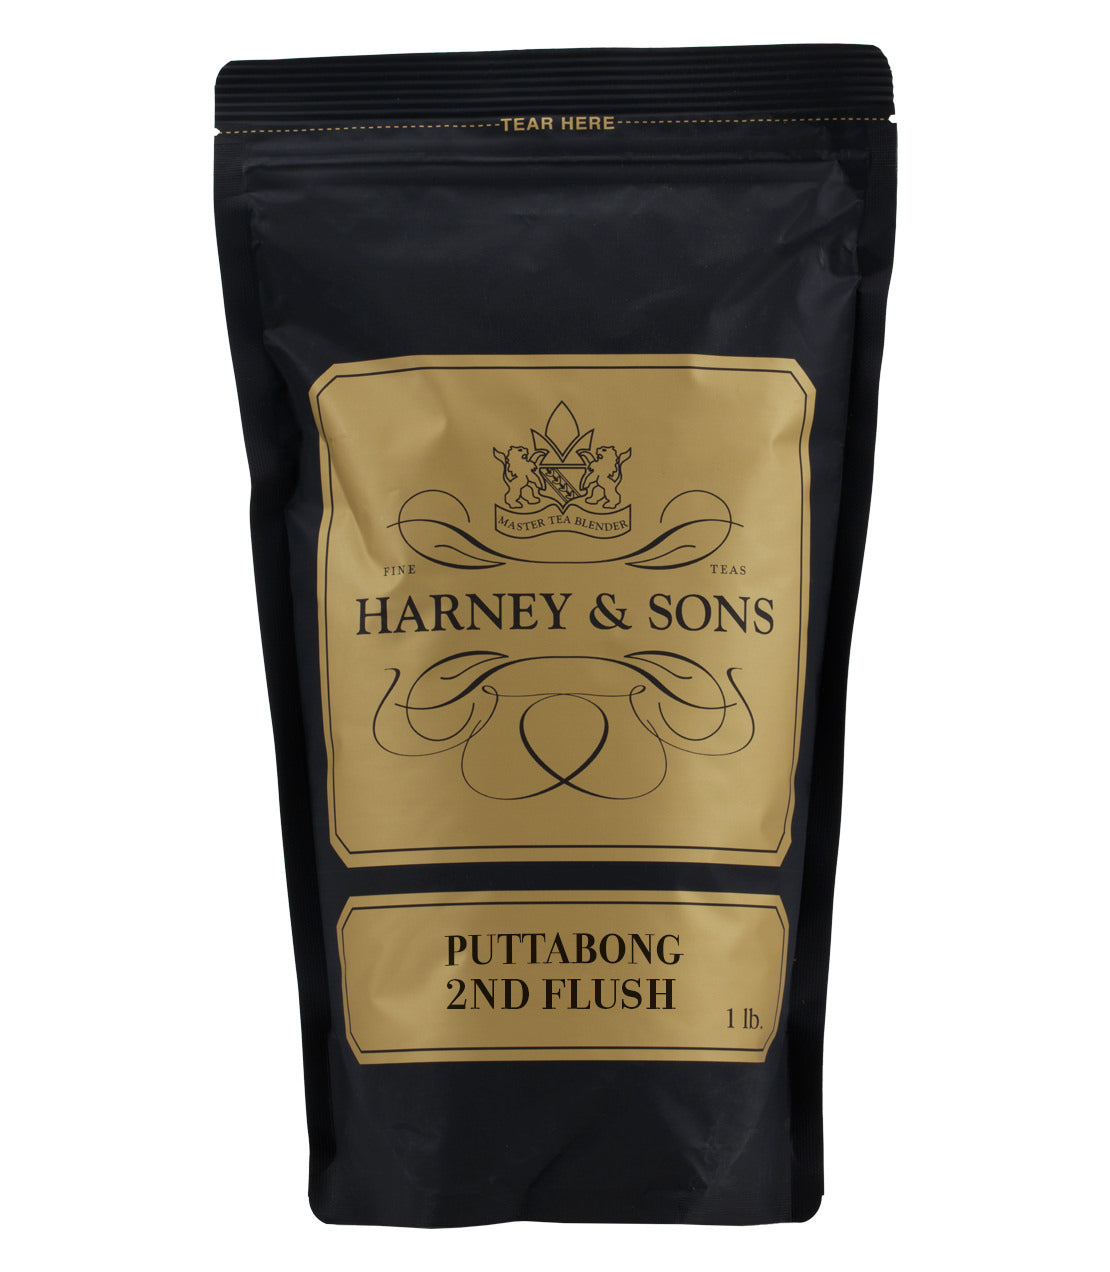 Puttabong 2nd Flush - Loose 1 lb. Bag - Harney & Sons Fine Teas